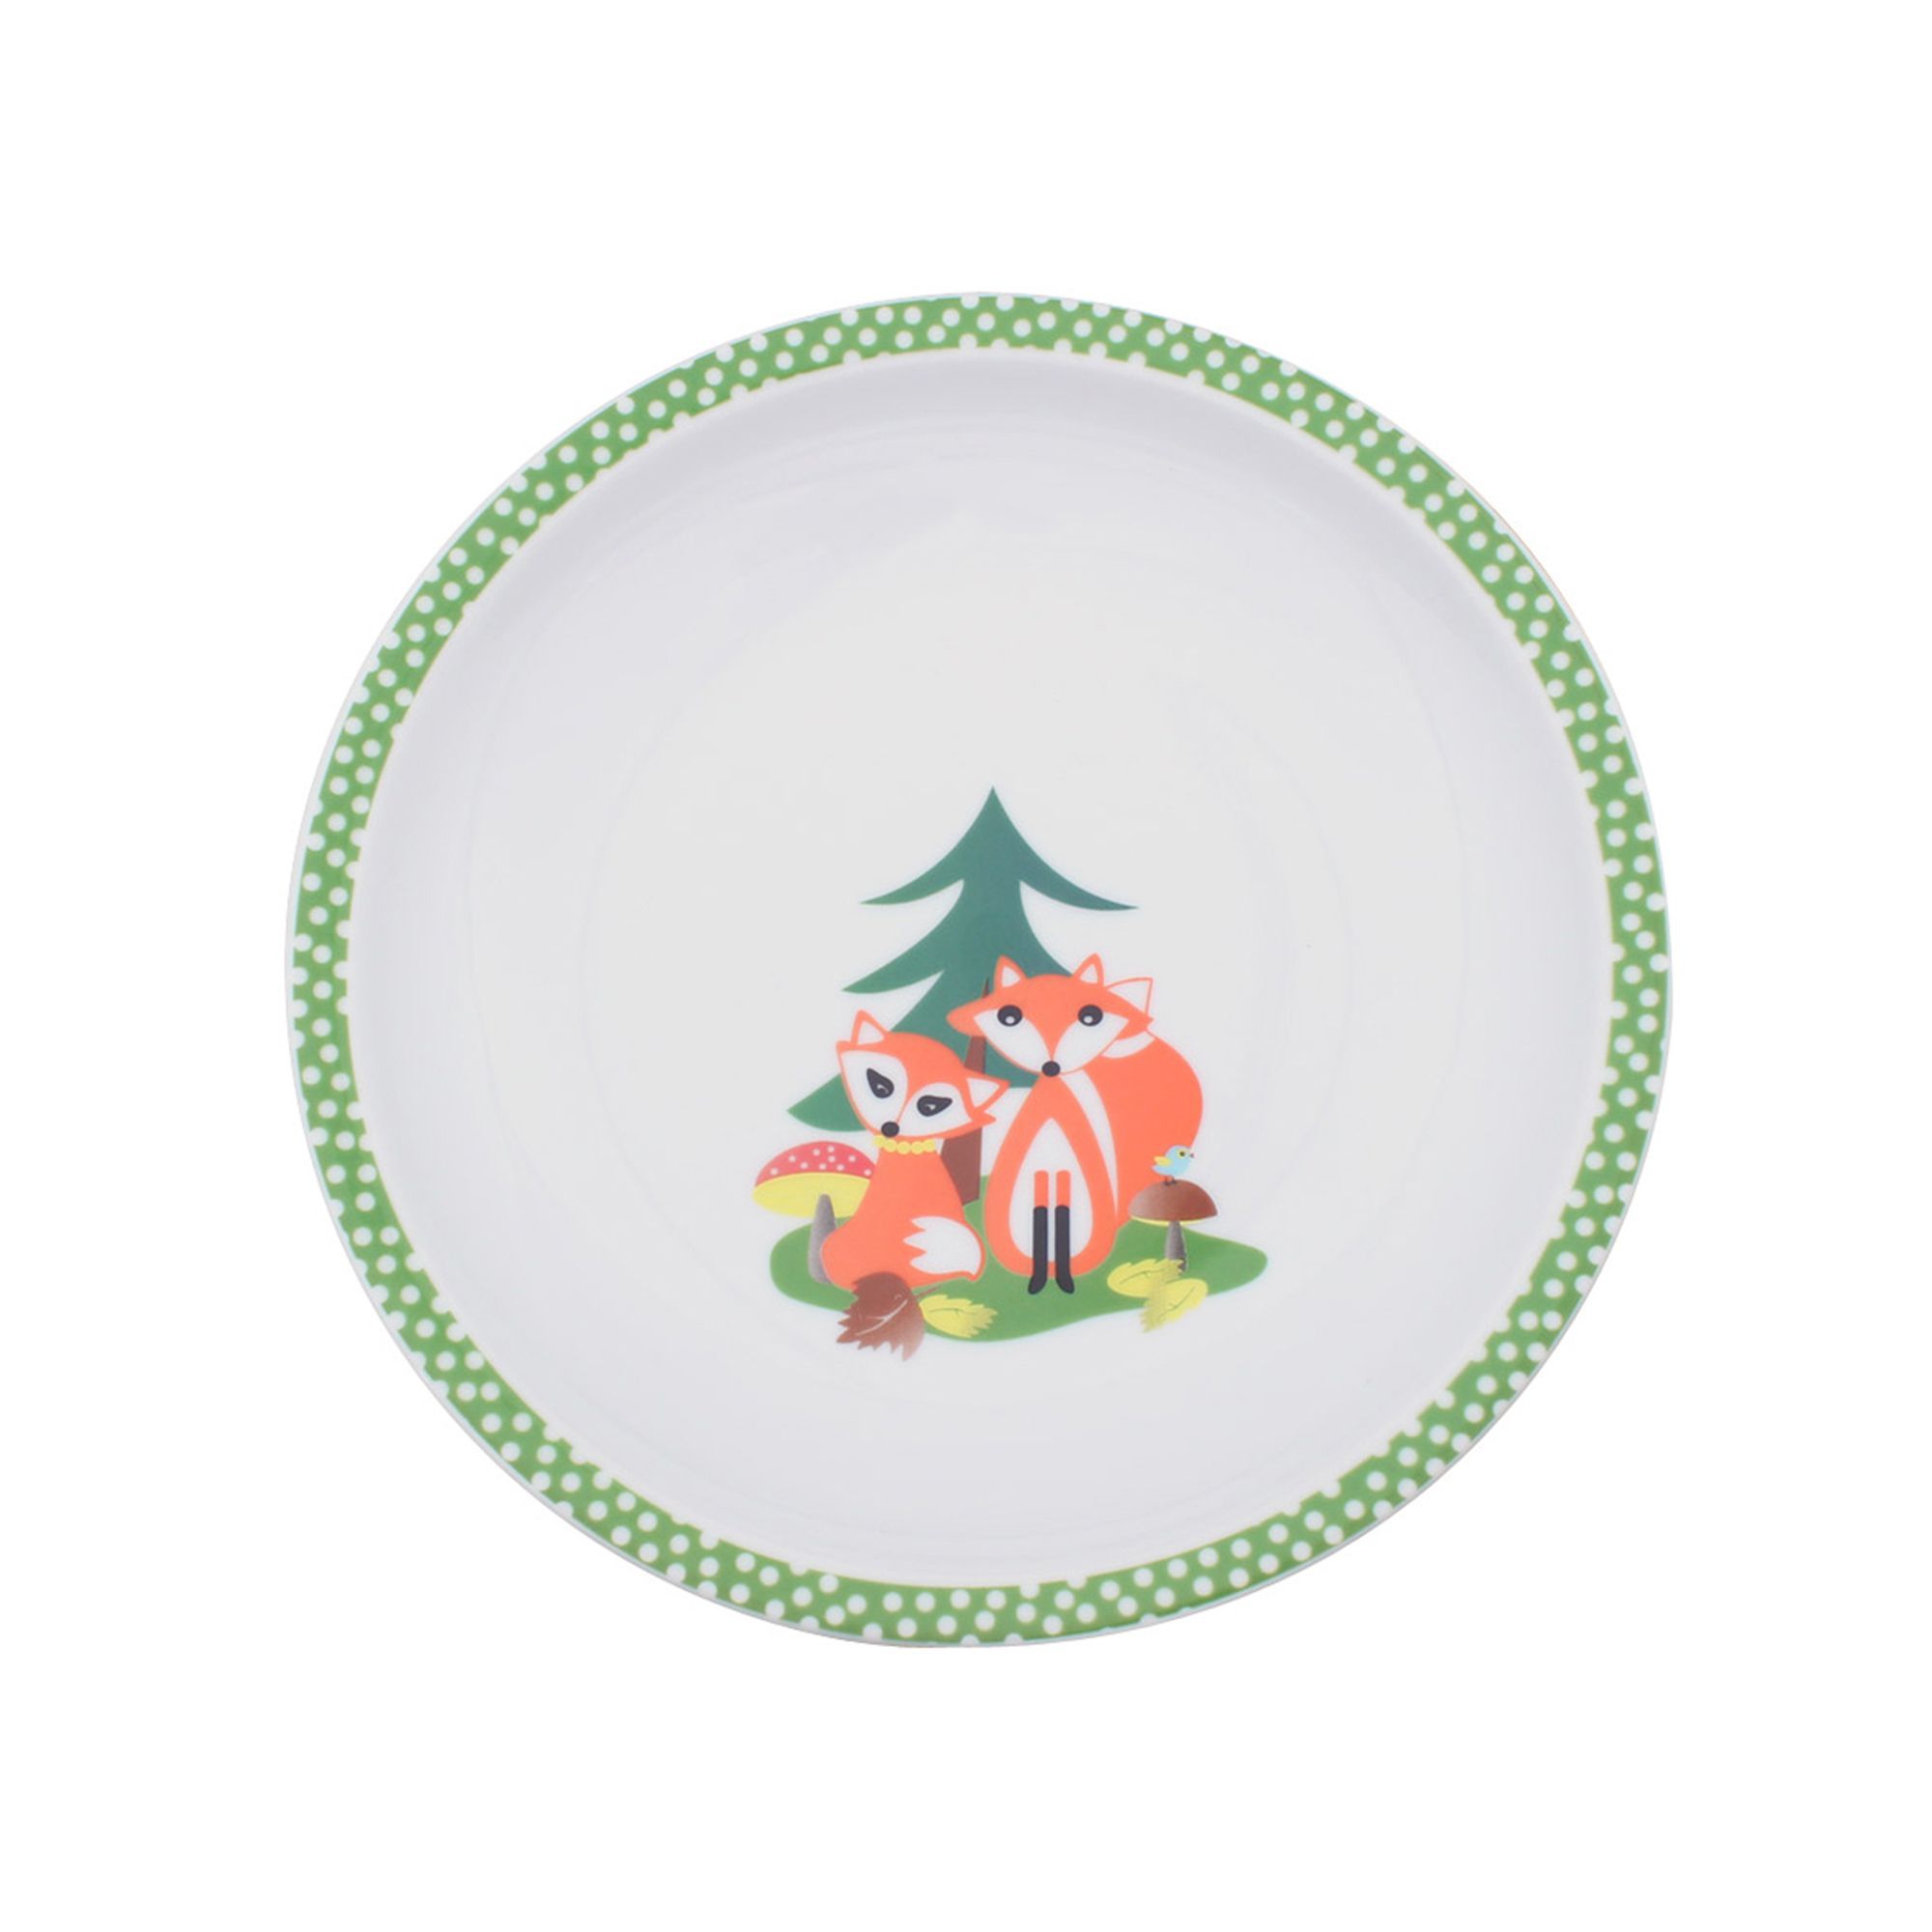 Eschenbach Children's tableware | Filou & Fred | Set 3pcs.